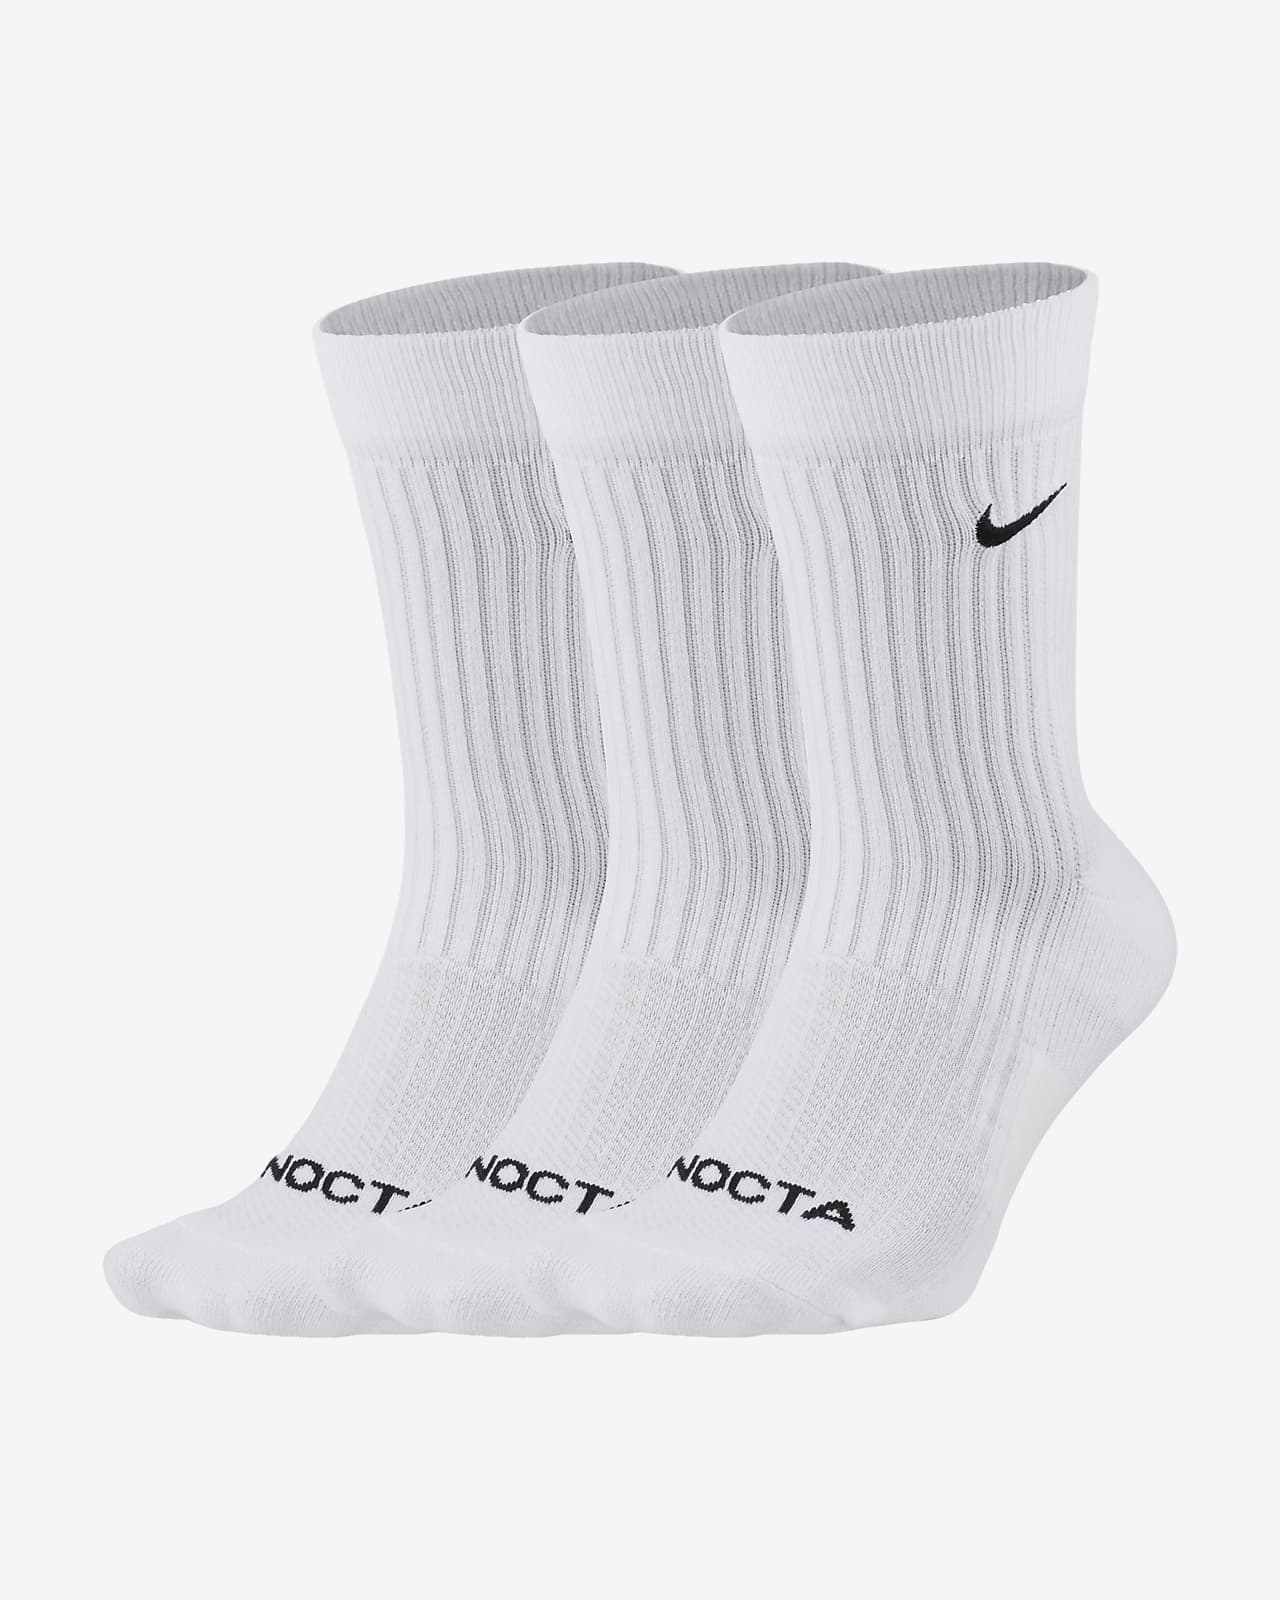 NOCTA Crew Socks (3 Pairs). Nike SK